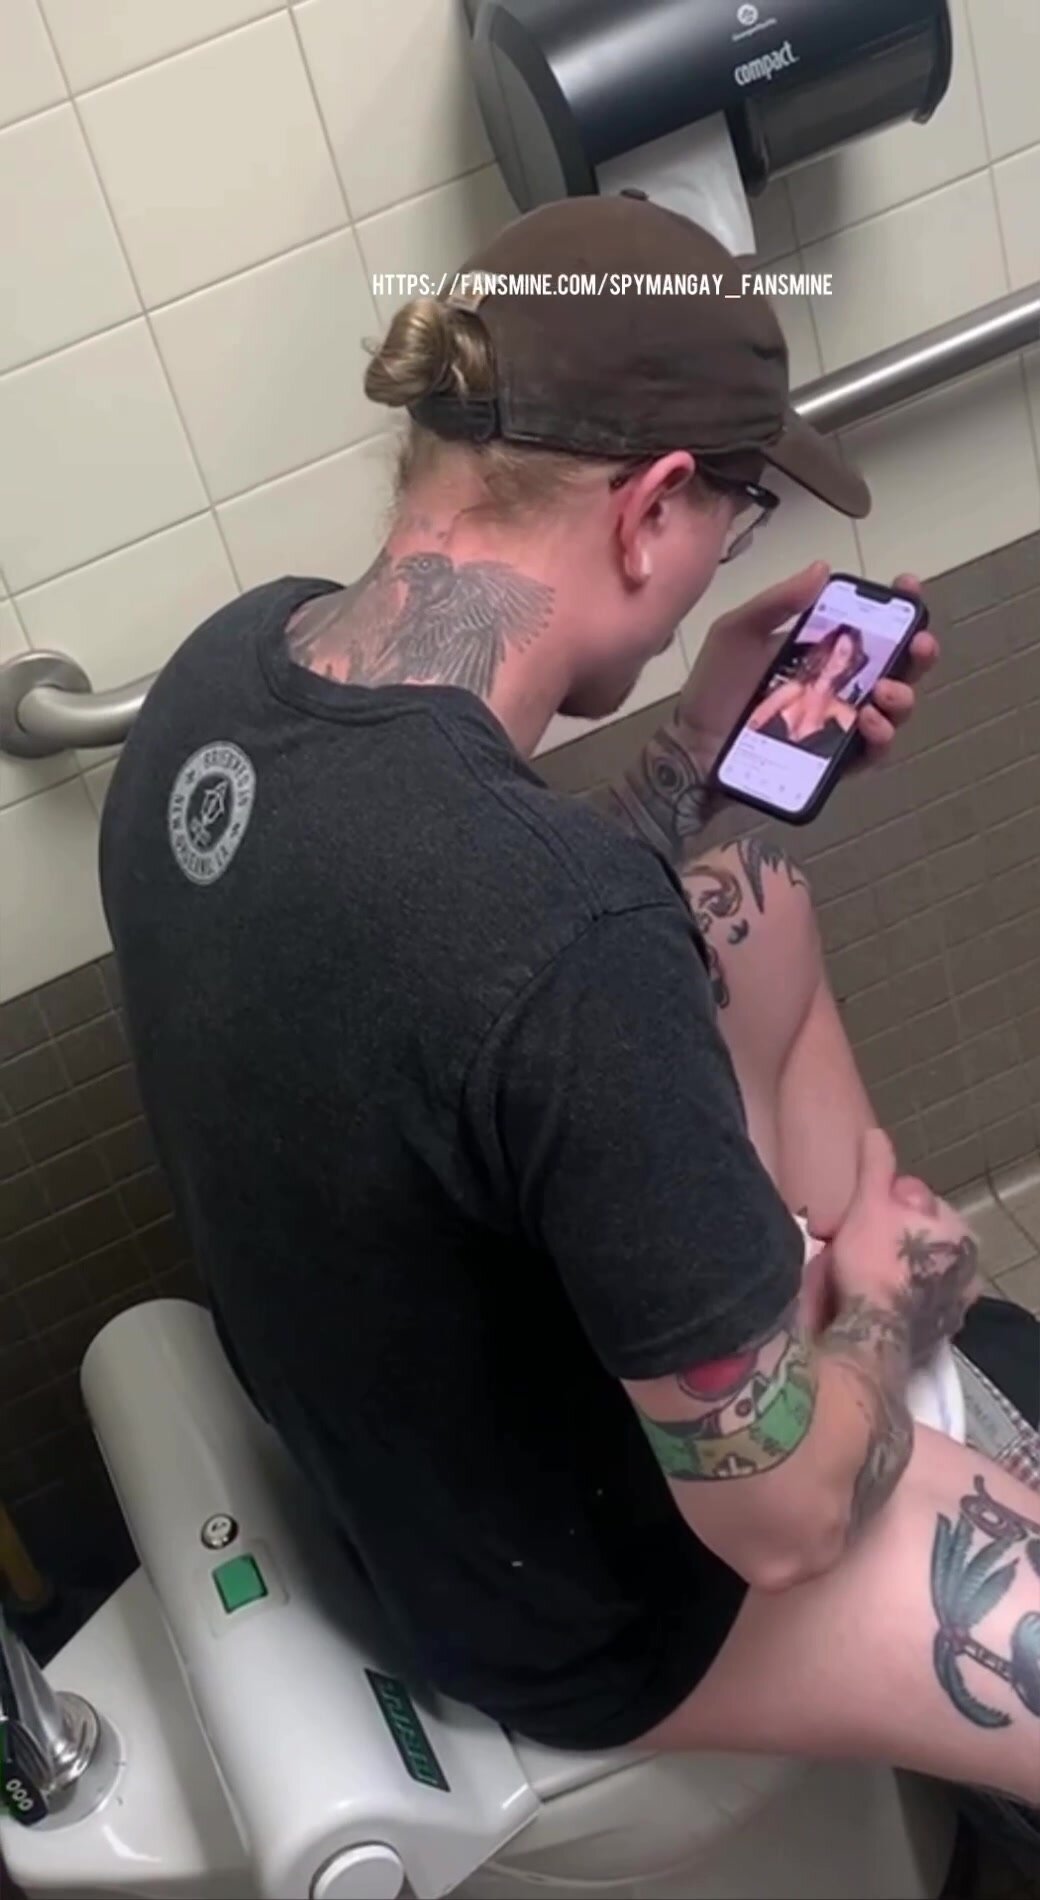 Hot tattoo guy jerks off in public bathroom